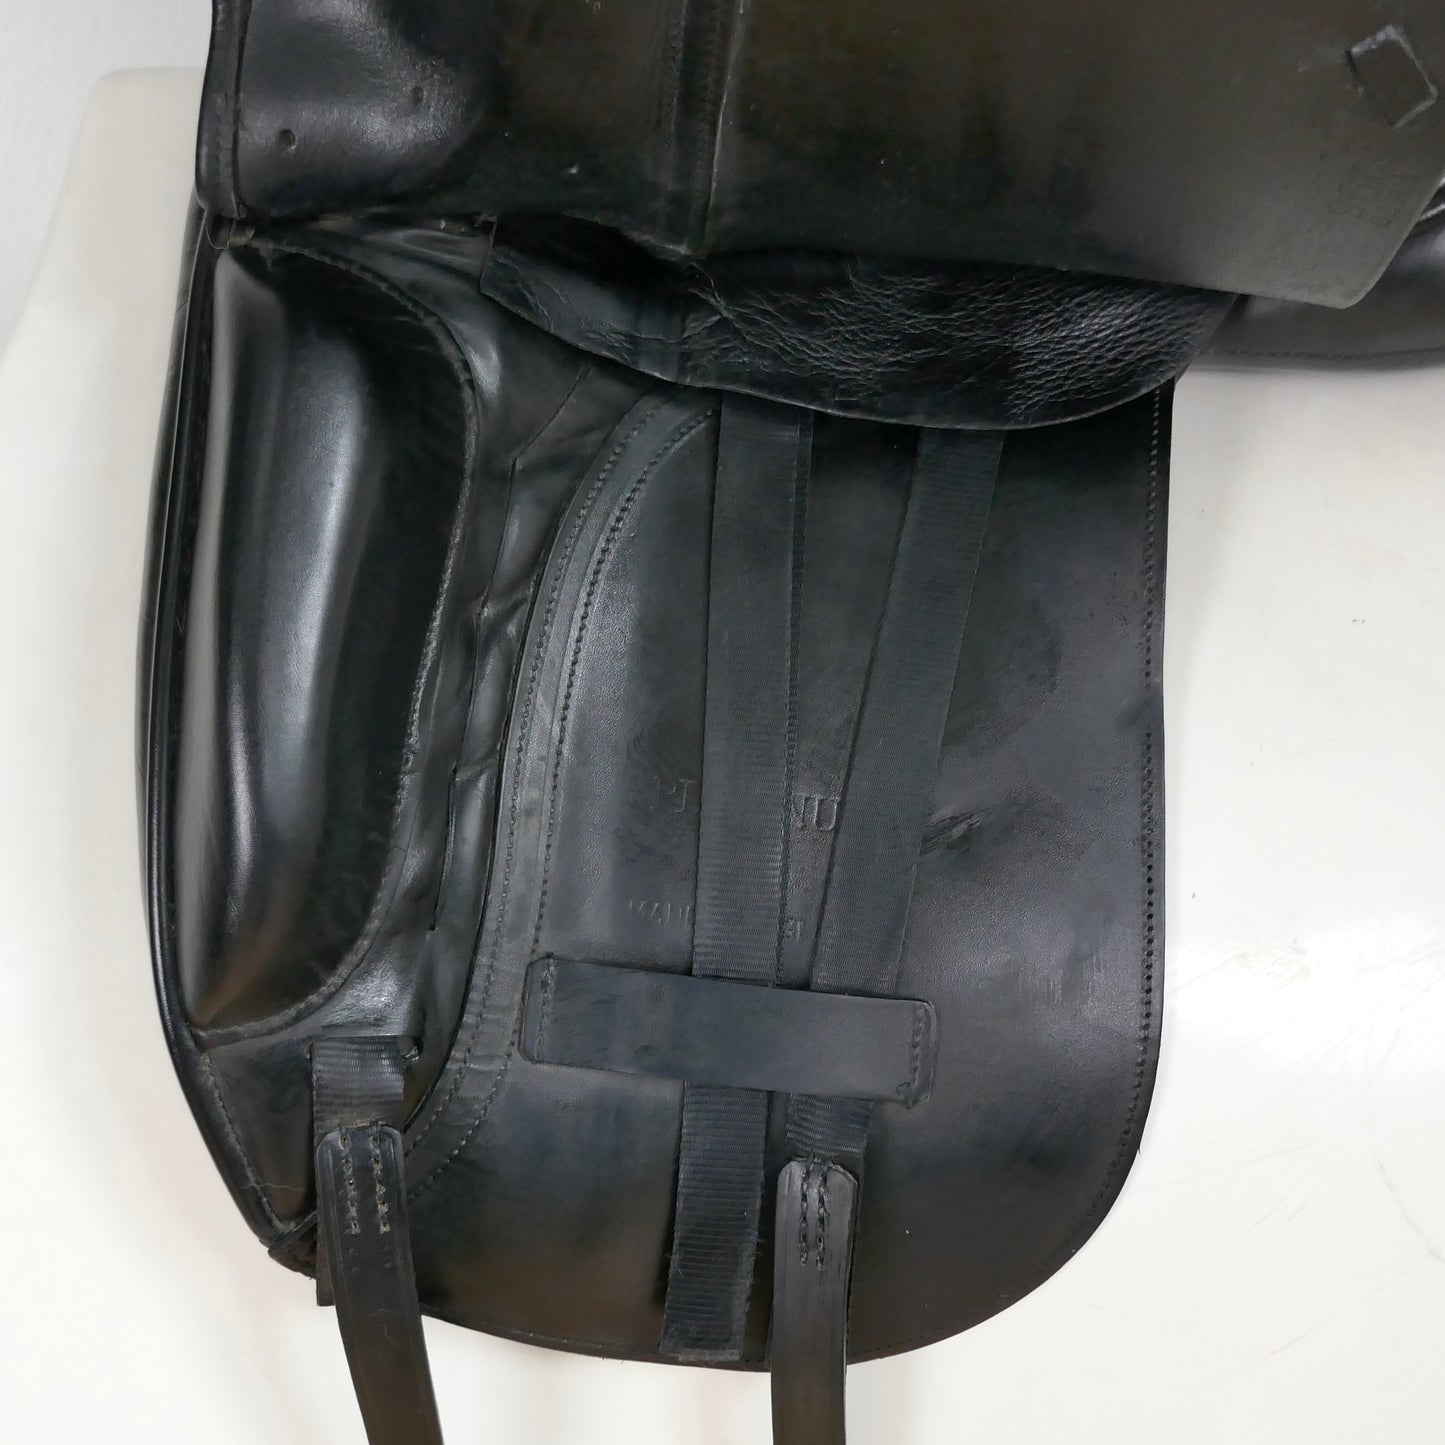 Albion Platinum Ultima SLK Dressage Saddle - 17.5" Medium (295) Black TD101